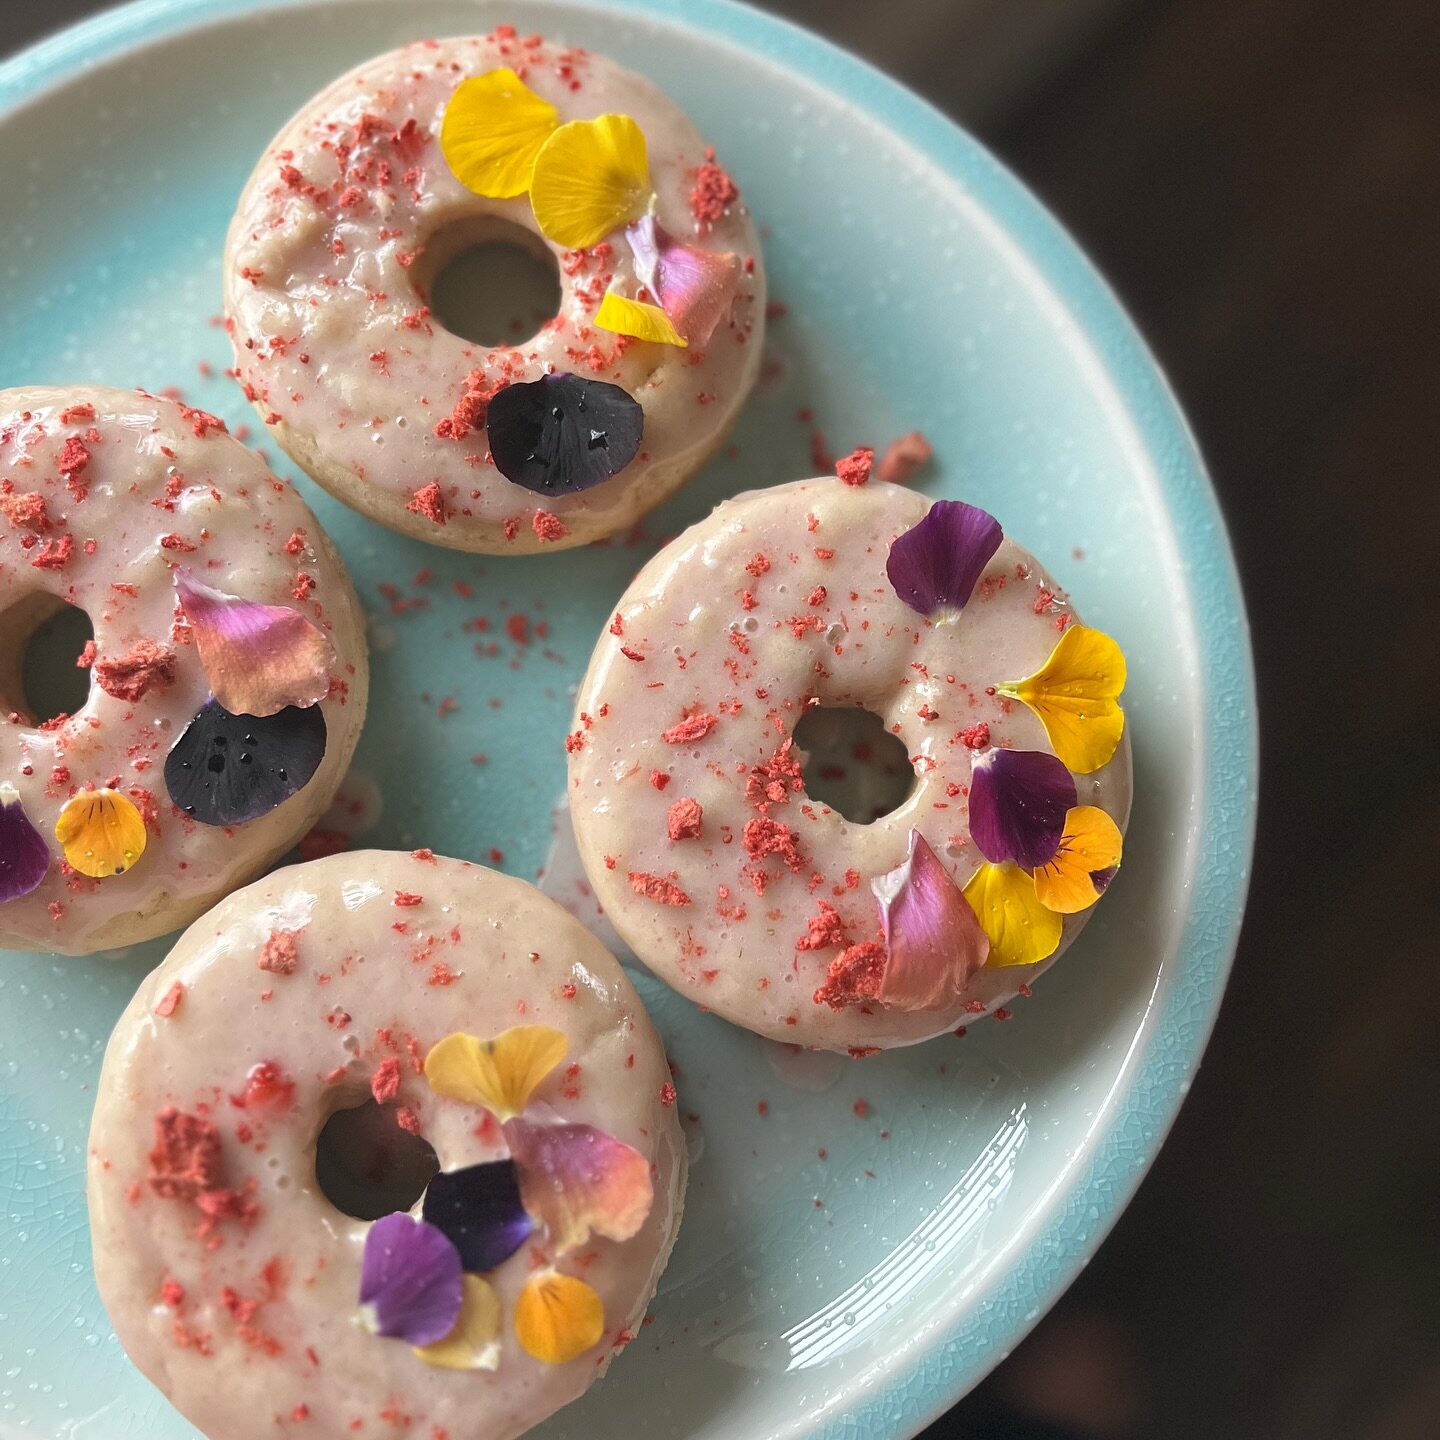 Warding off the Sunday Scaries with some homemade baked donuts 🍩

🌸 @kulafarm 

#shareyourtable #damnthatsdelish #gatherandfeast #eatmoremagic #njcaterer #chefpablotoxqui #hautefeast